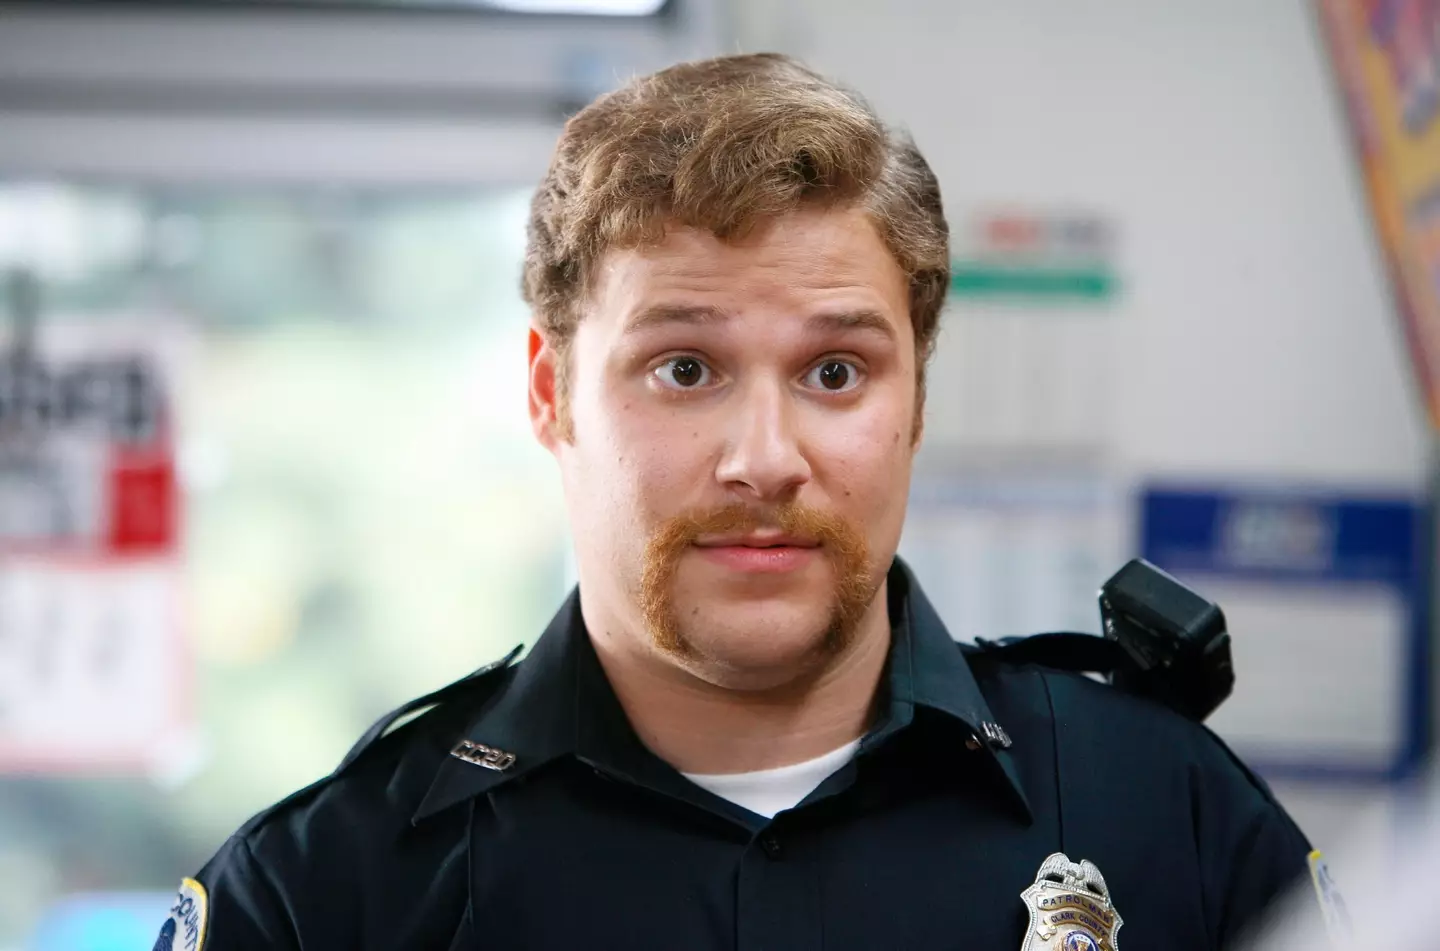 Seth Rogen played Officer Michaels in Superbad.